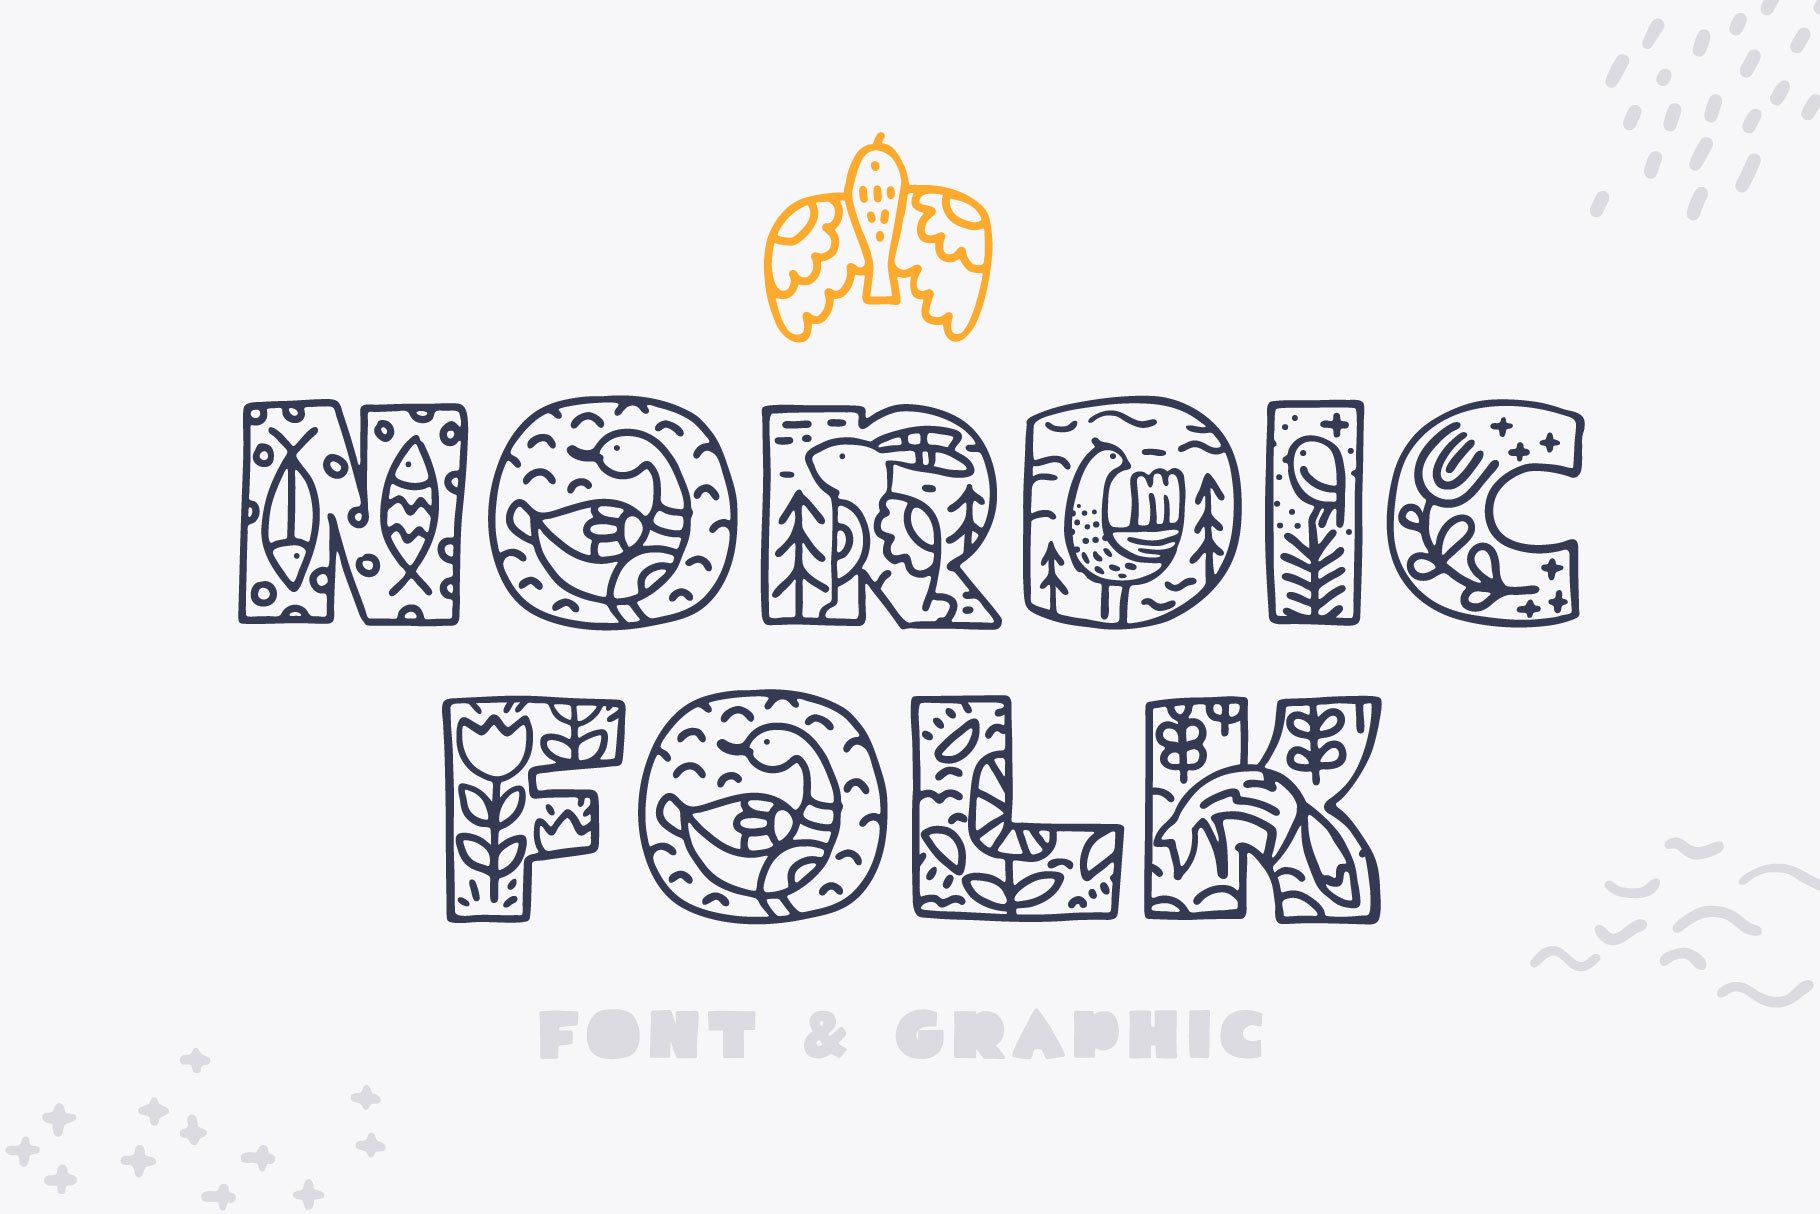 NordicFolk fonts & graphic set cover image.